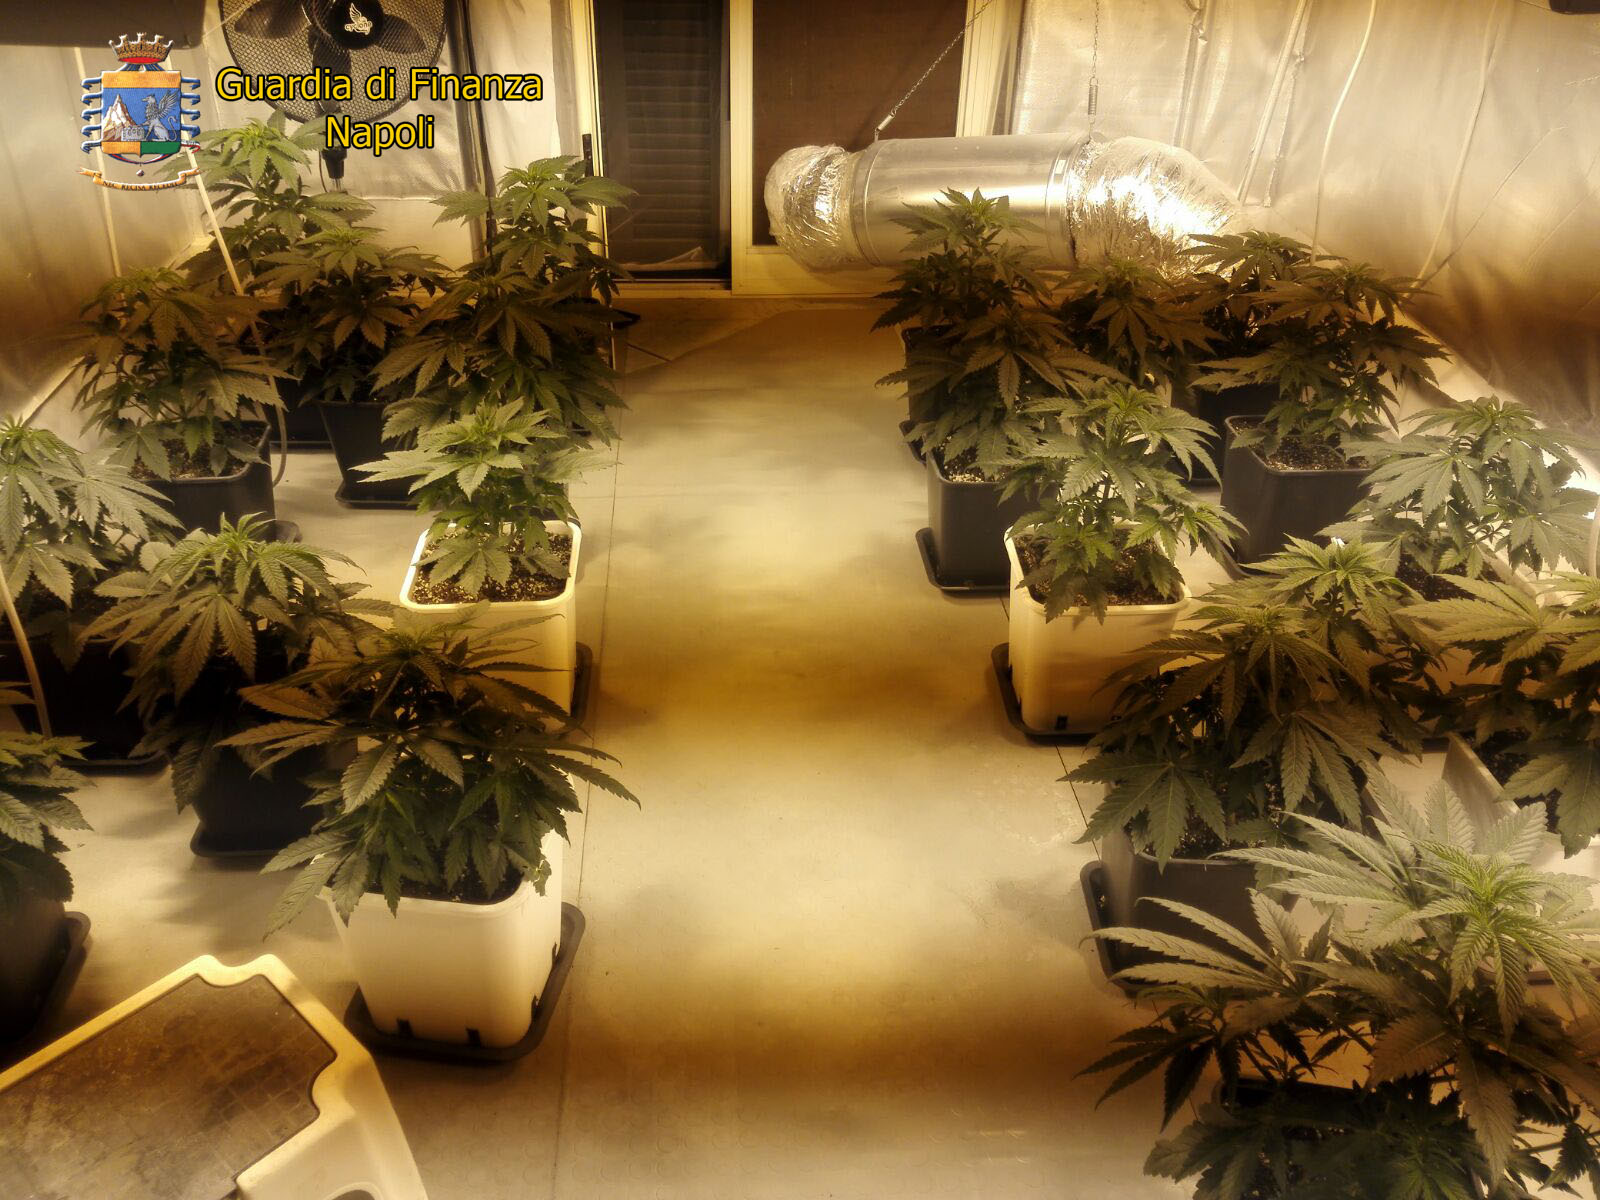  Sorpresi in un appartamento di Villaricca a coltivare marijuana in una serra: due arresti